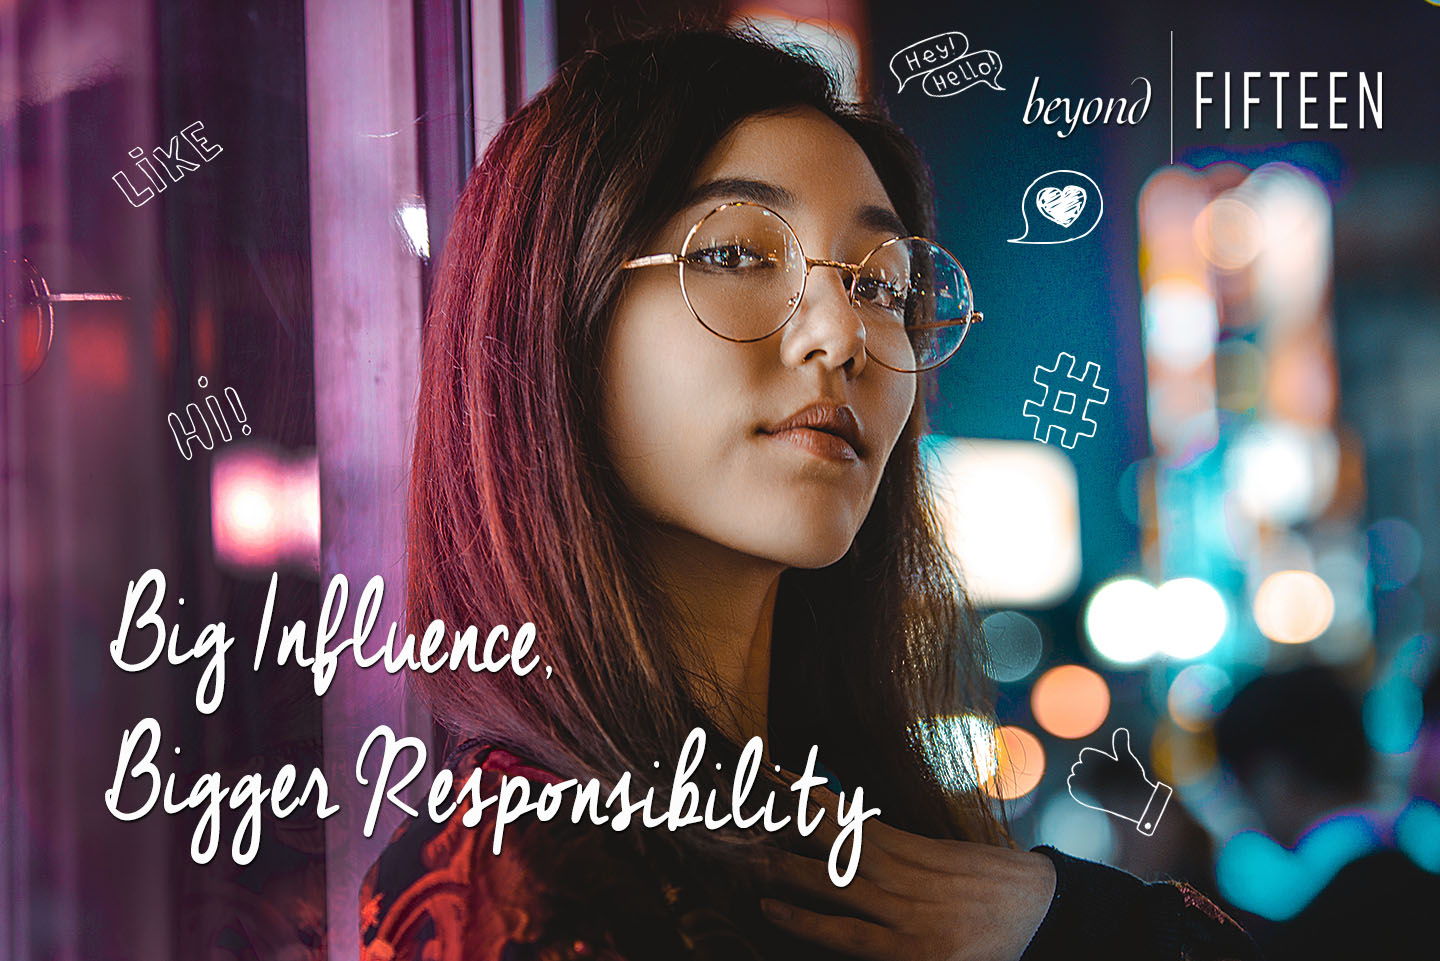 Big Influence – Bigger responsibility